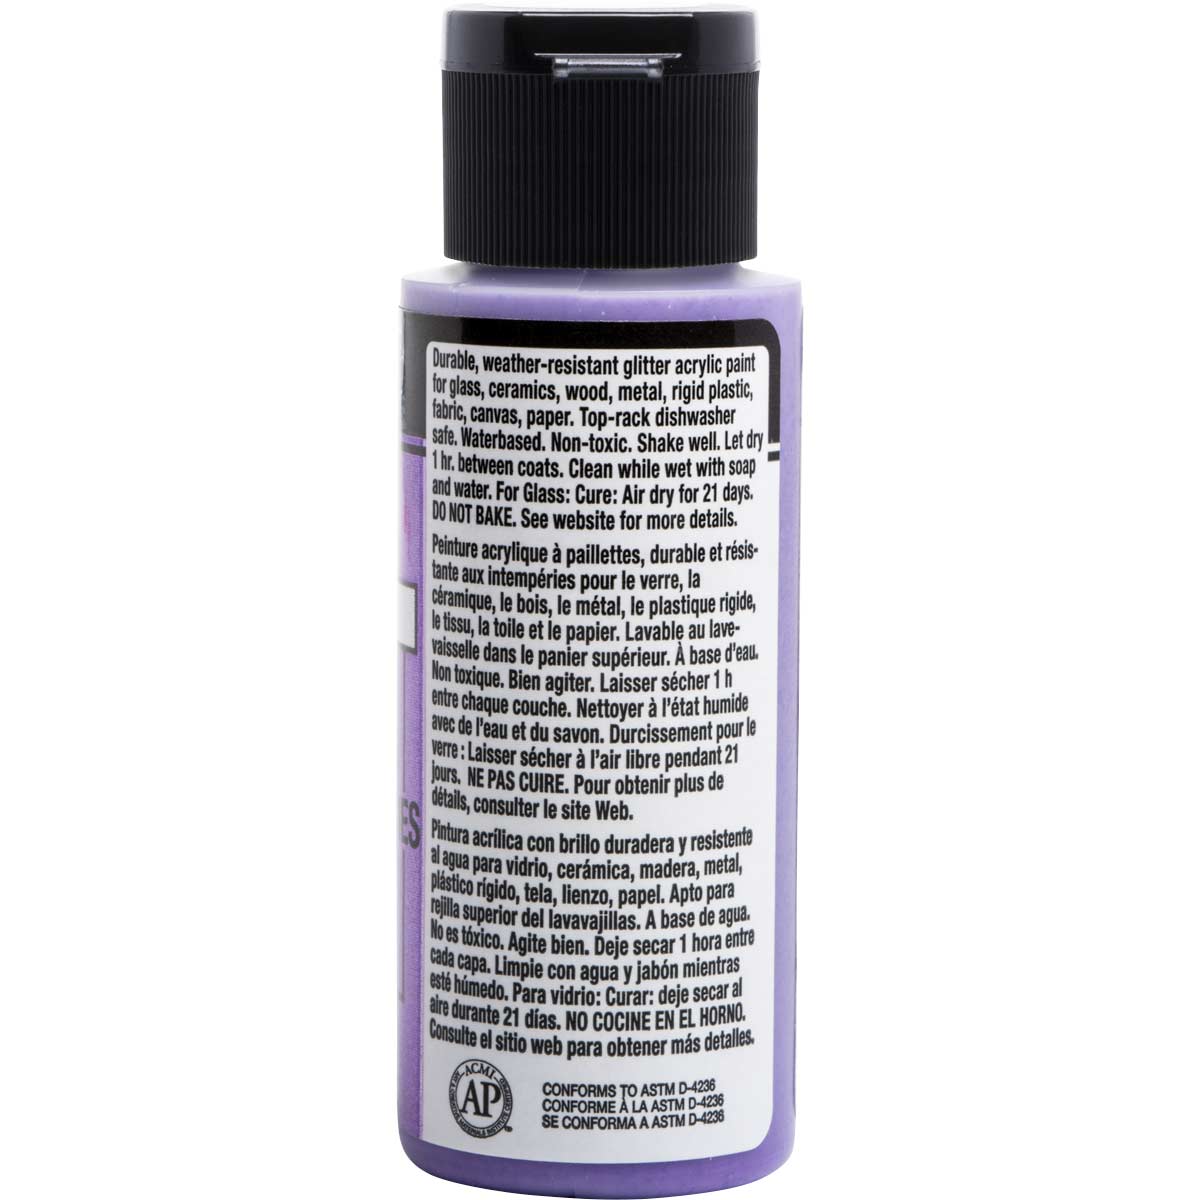 FolkArt ® Multi-Surface Glitter Acrylic Paints - Royal Purple, 2 oz. - 2962